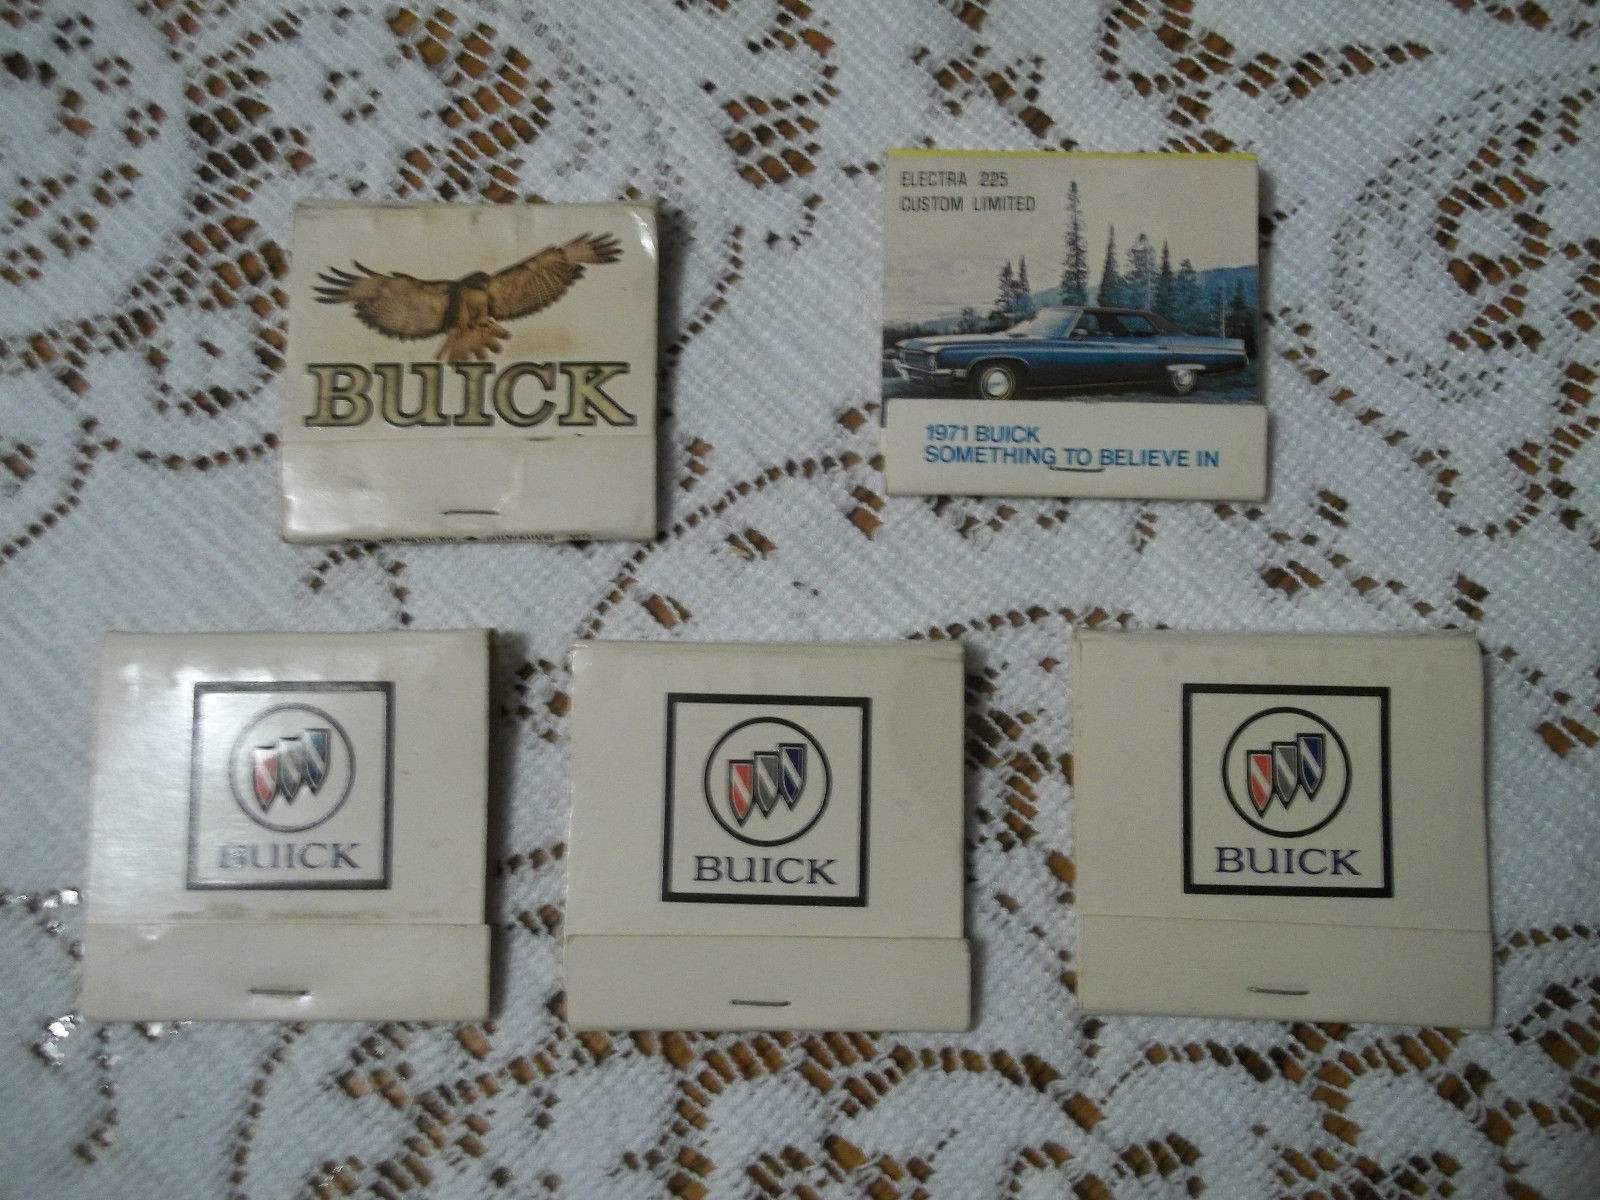 Buick Matchbooks